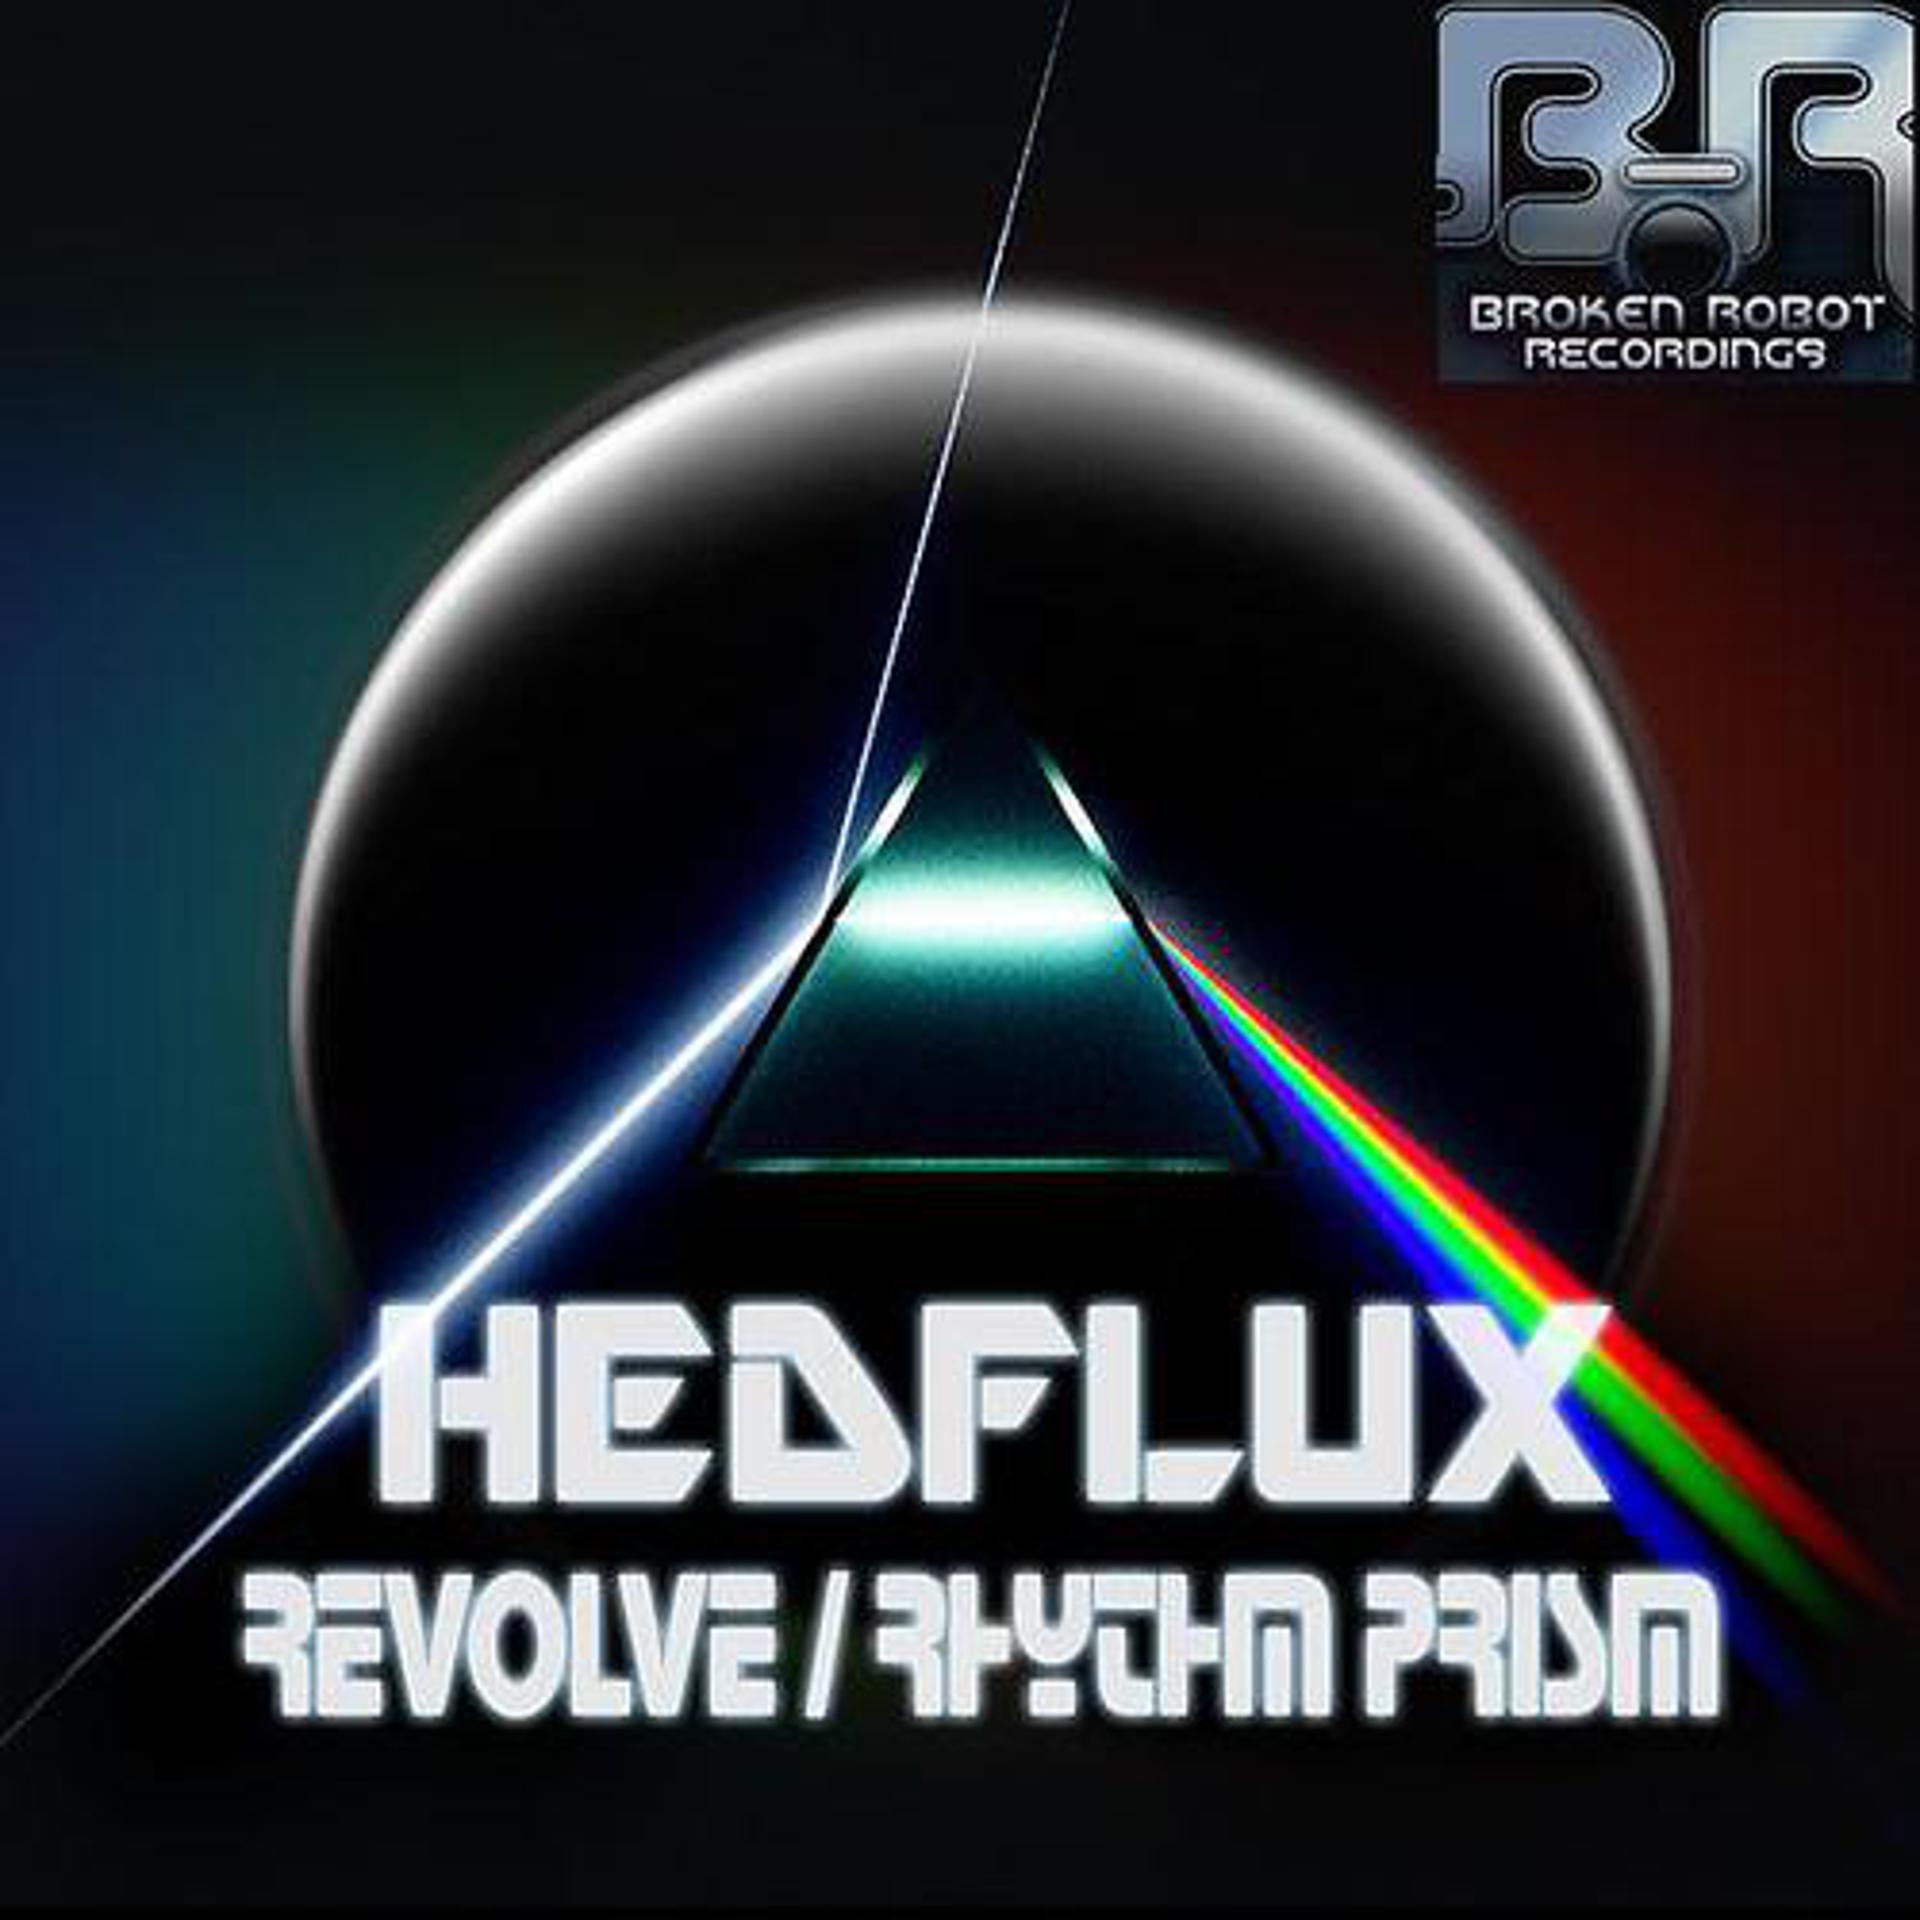 Постер альбома Hedflux: Revolve / Rhythm Prism